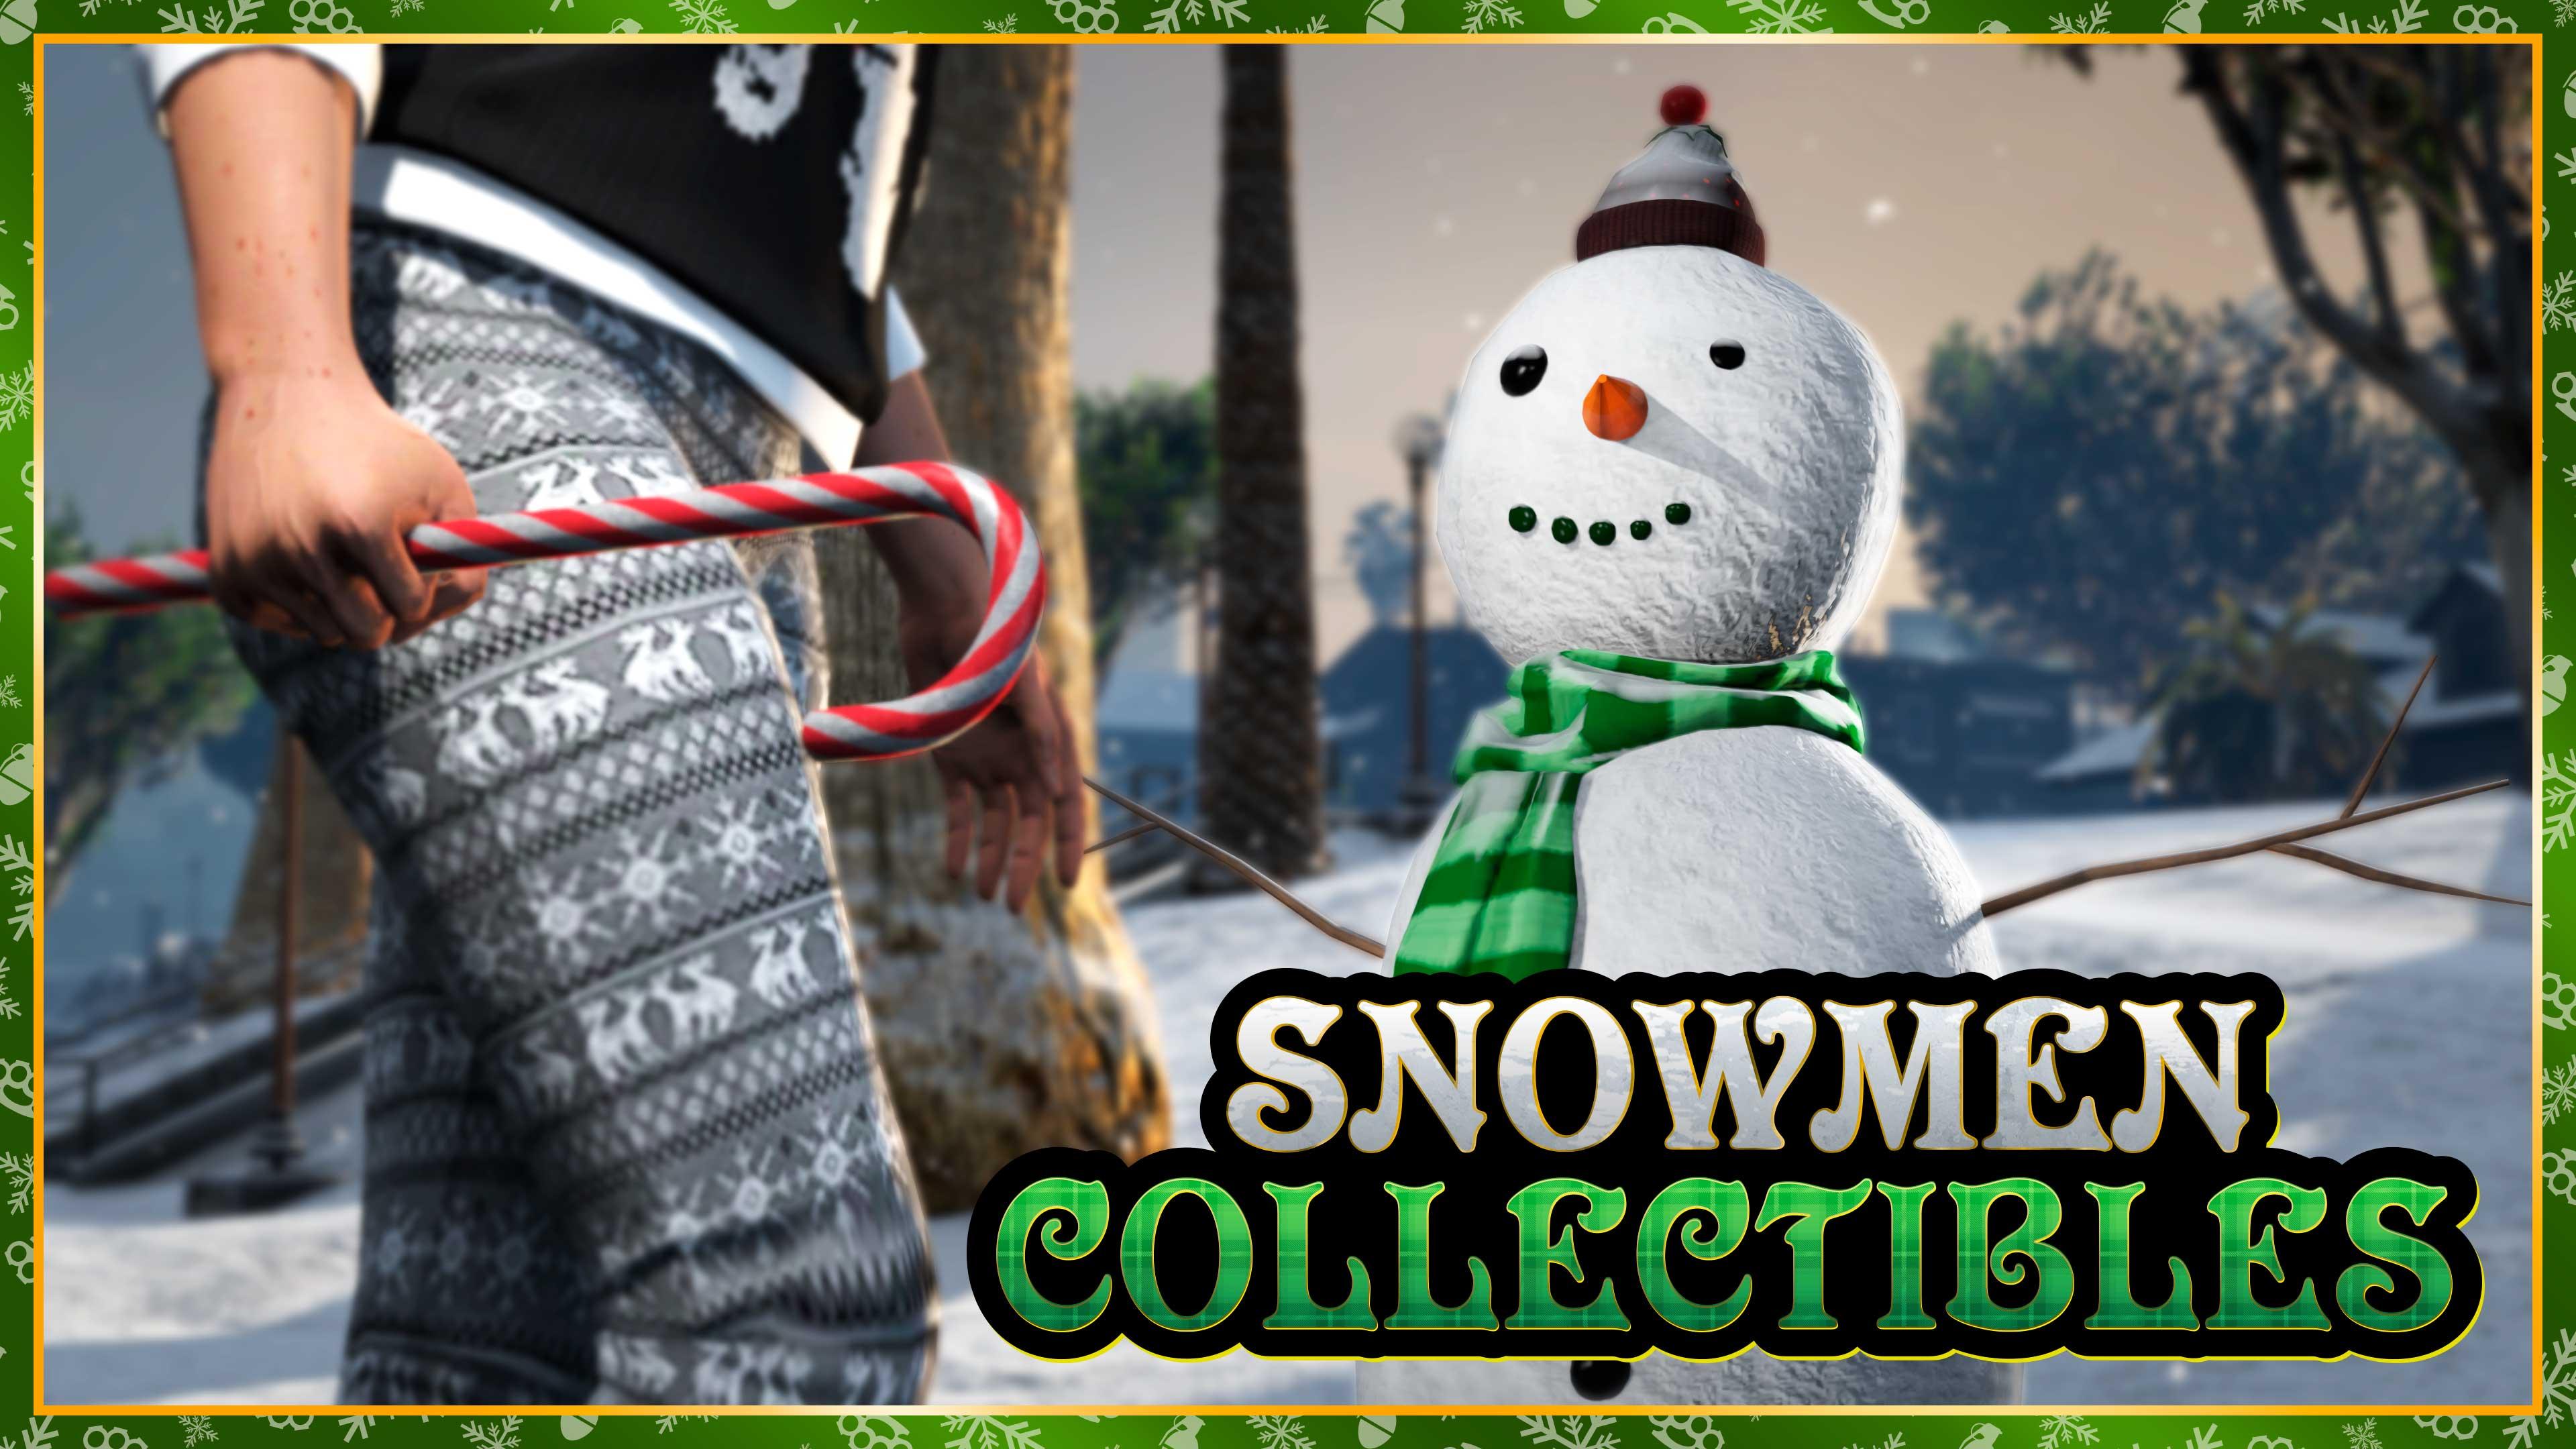 Snowmen Collectibles in GTA Online